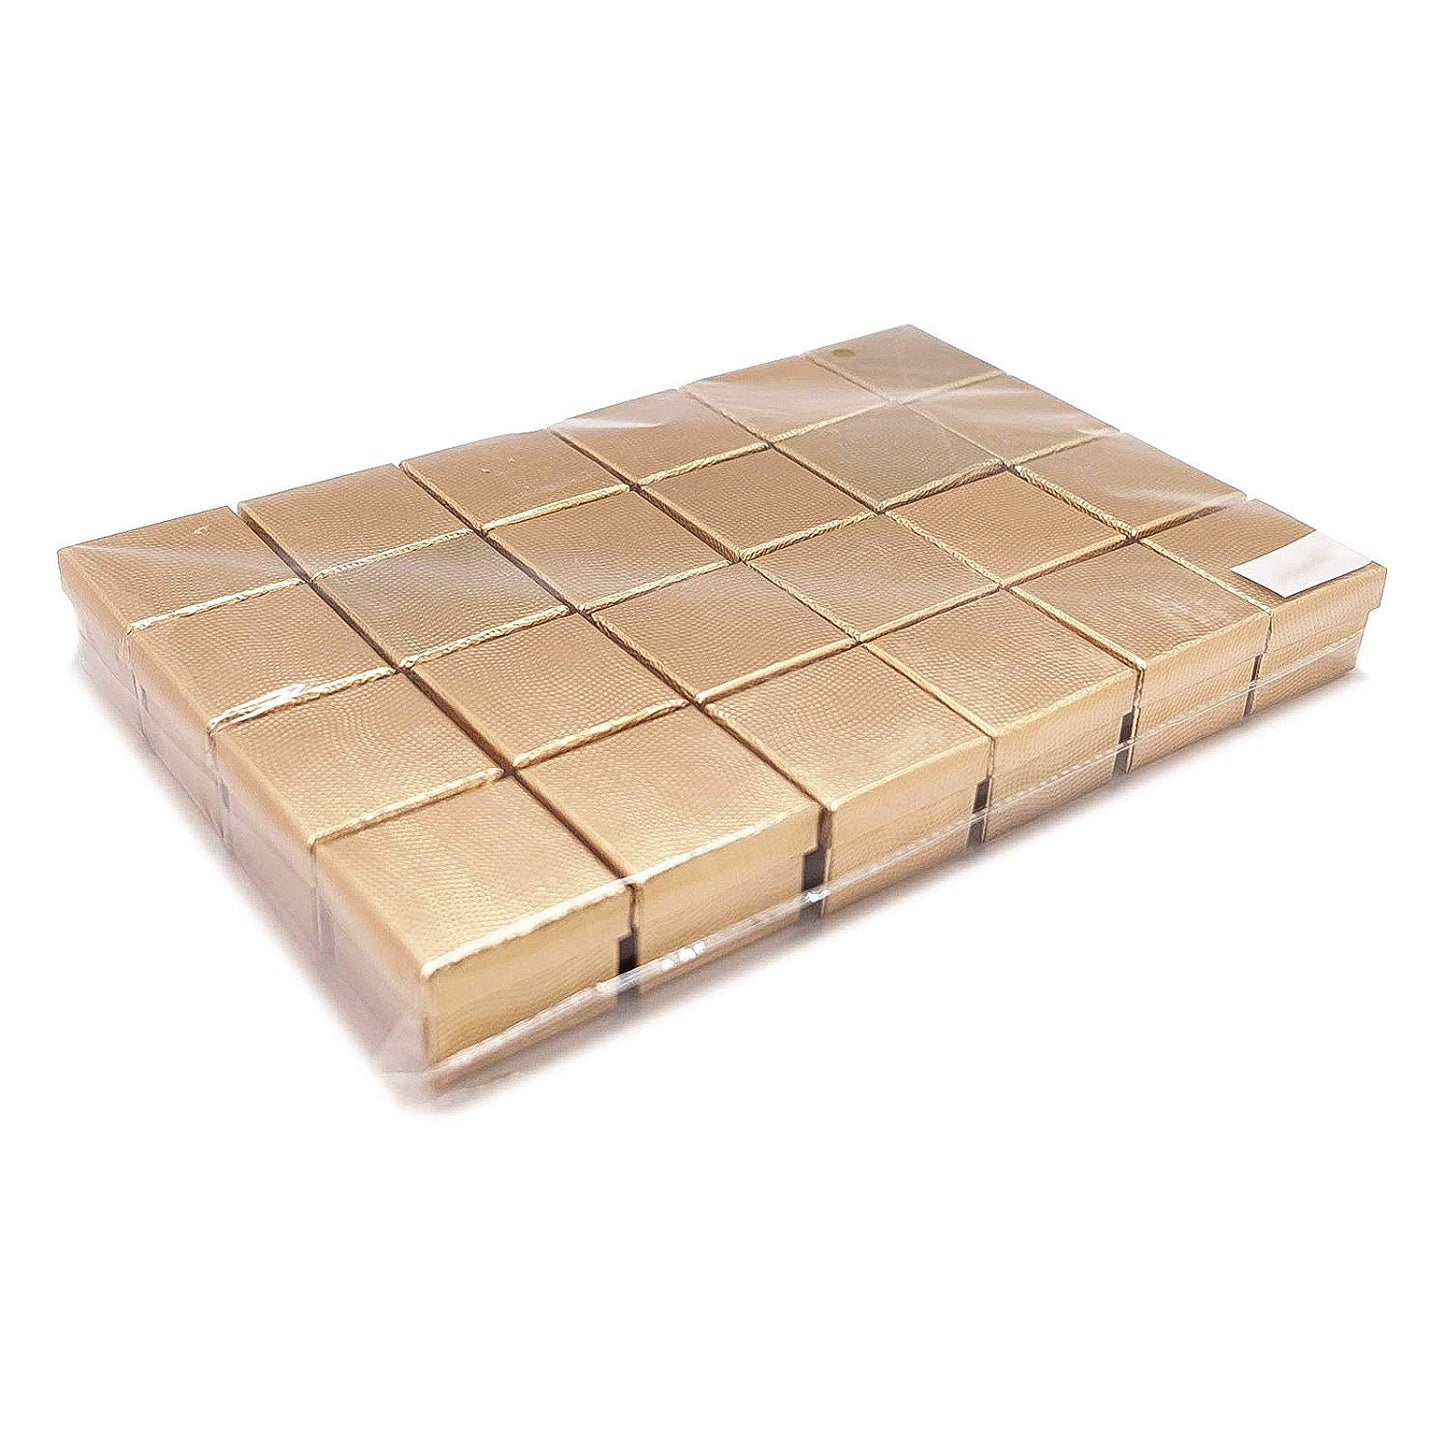 1 3/4" x 1 3/4" Gold Cardboard Jewelry Box with White Velvet Insert